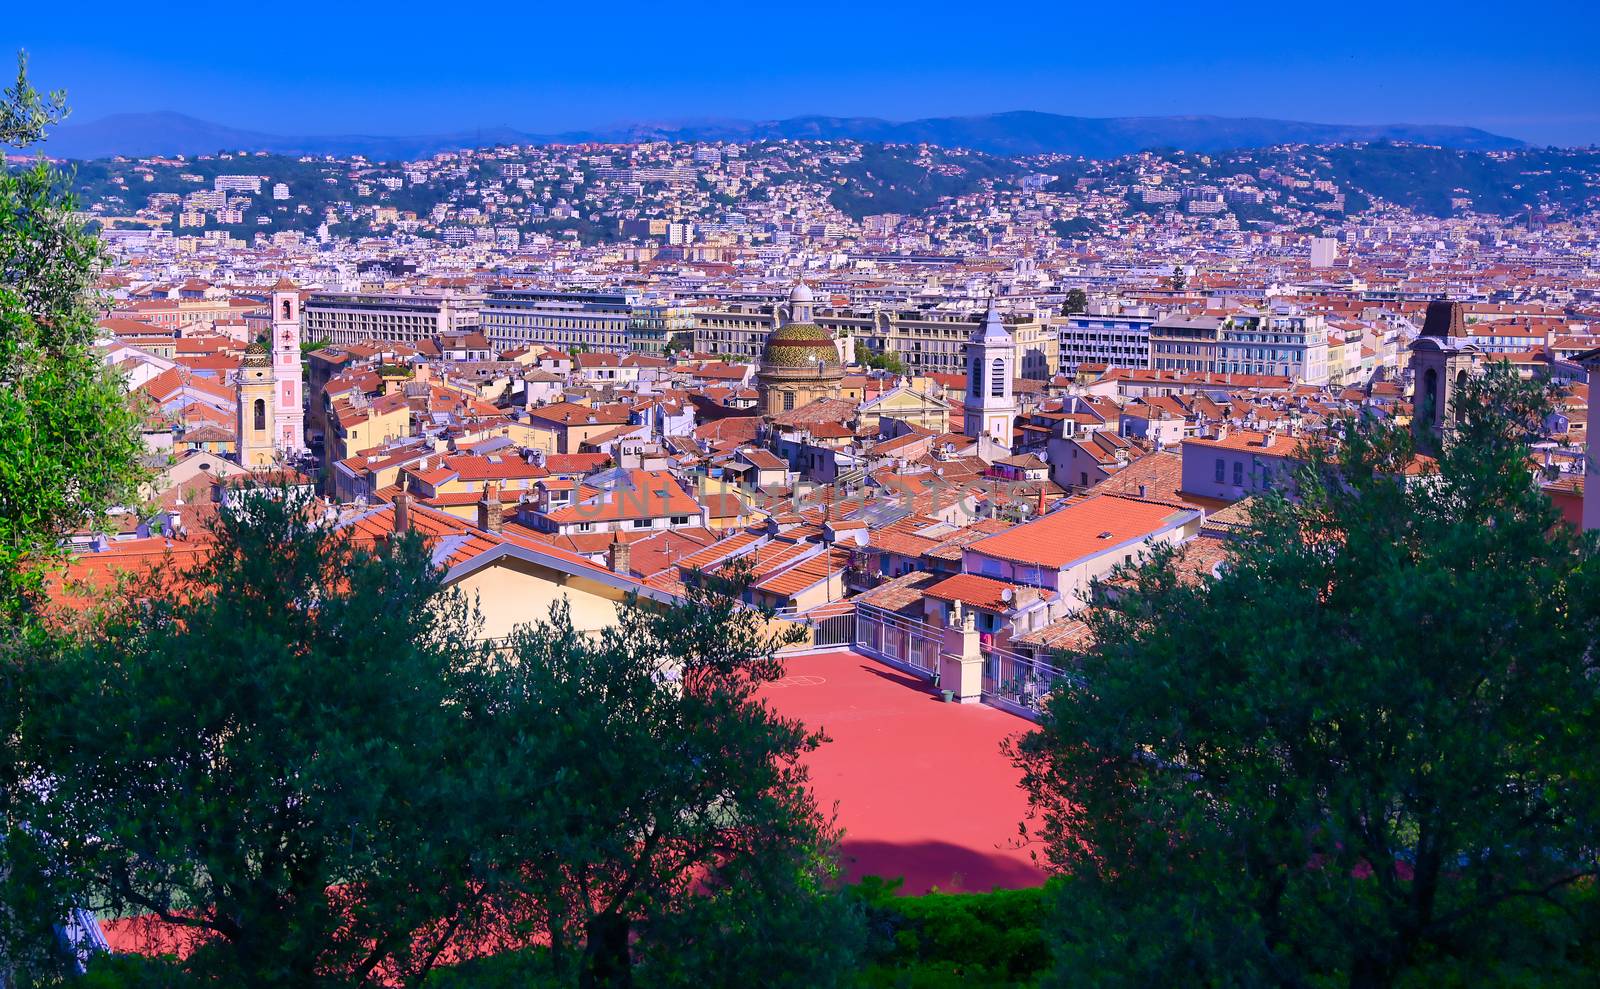 Aerial view of Nice, France by jbyard22